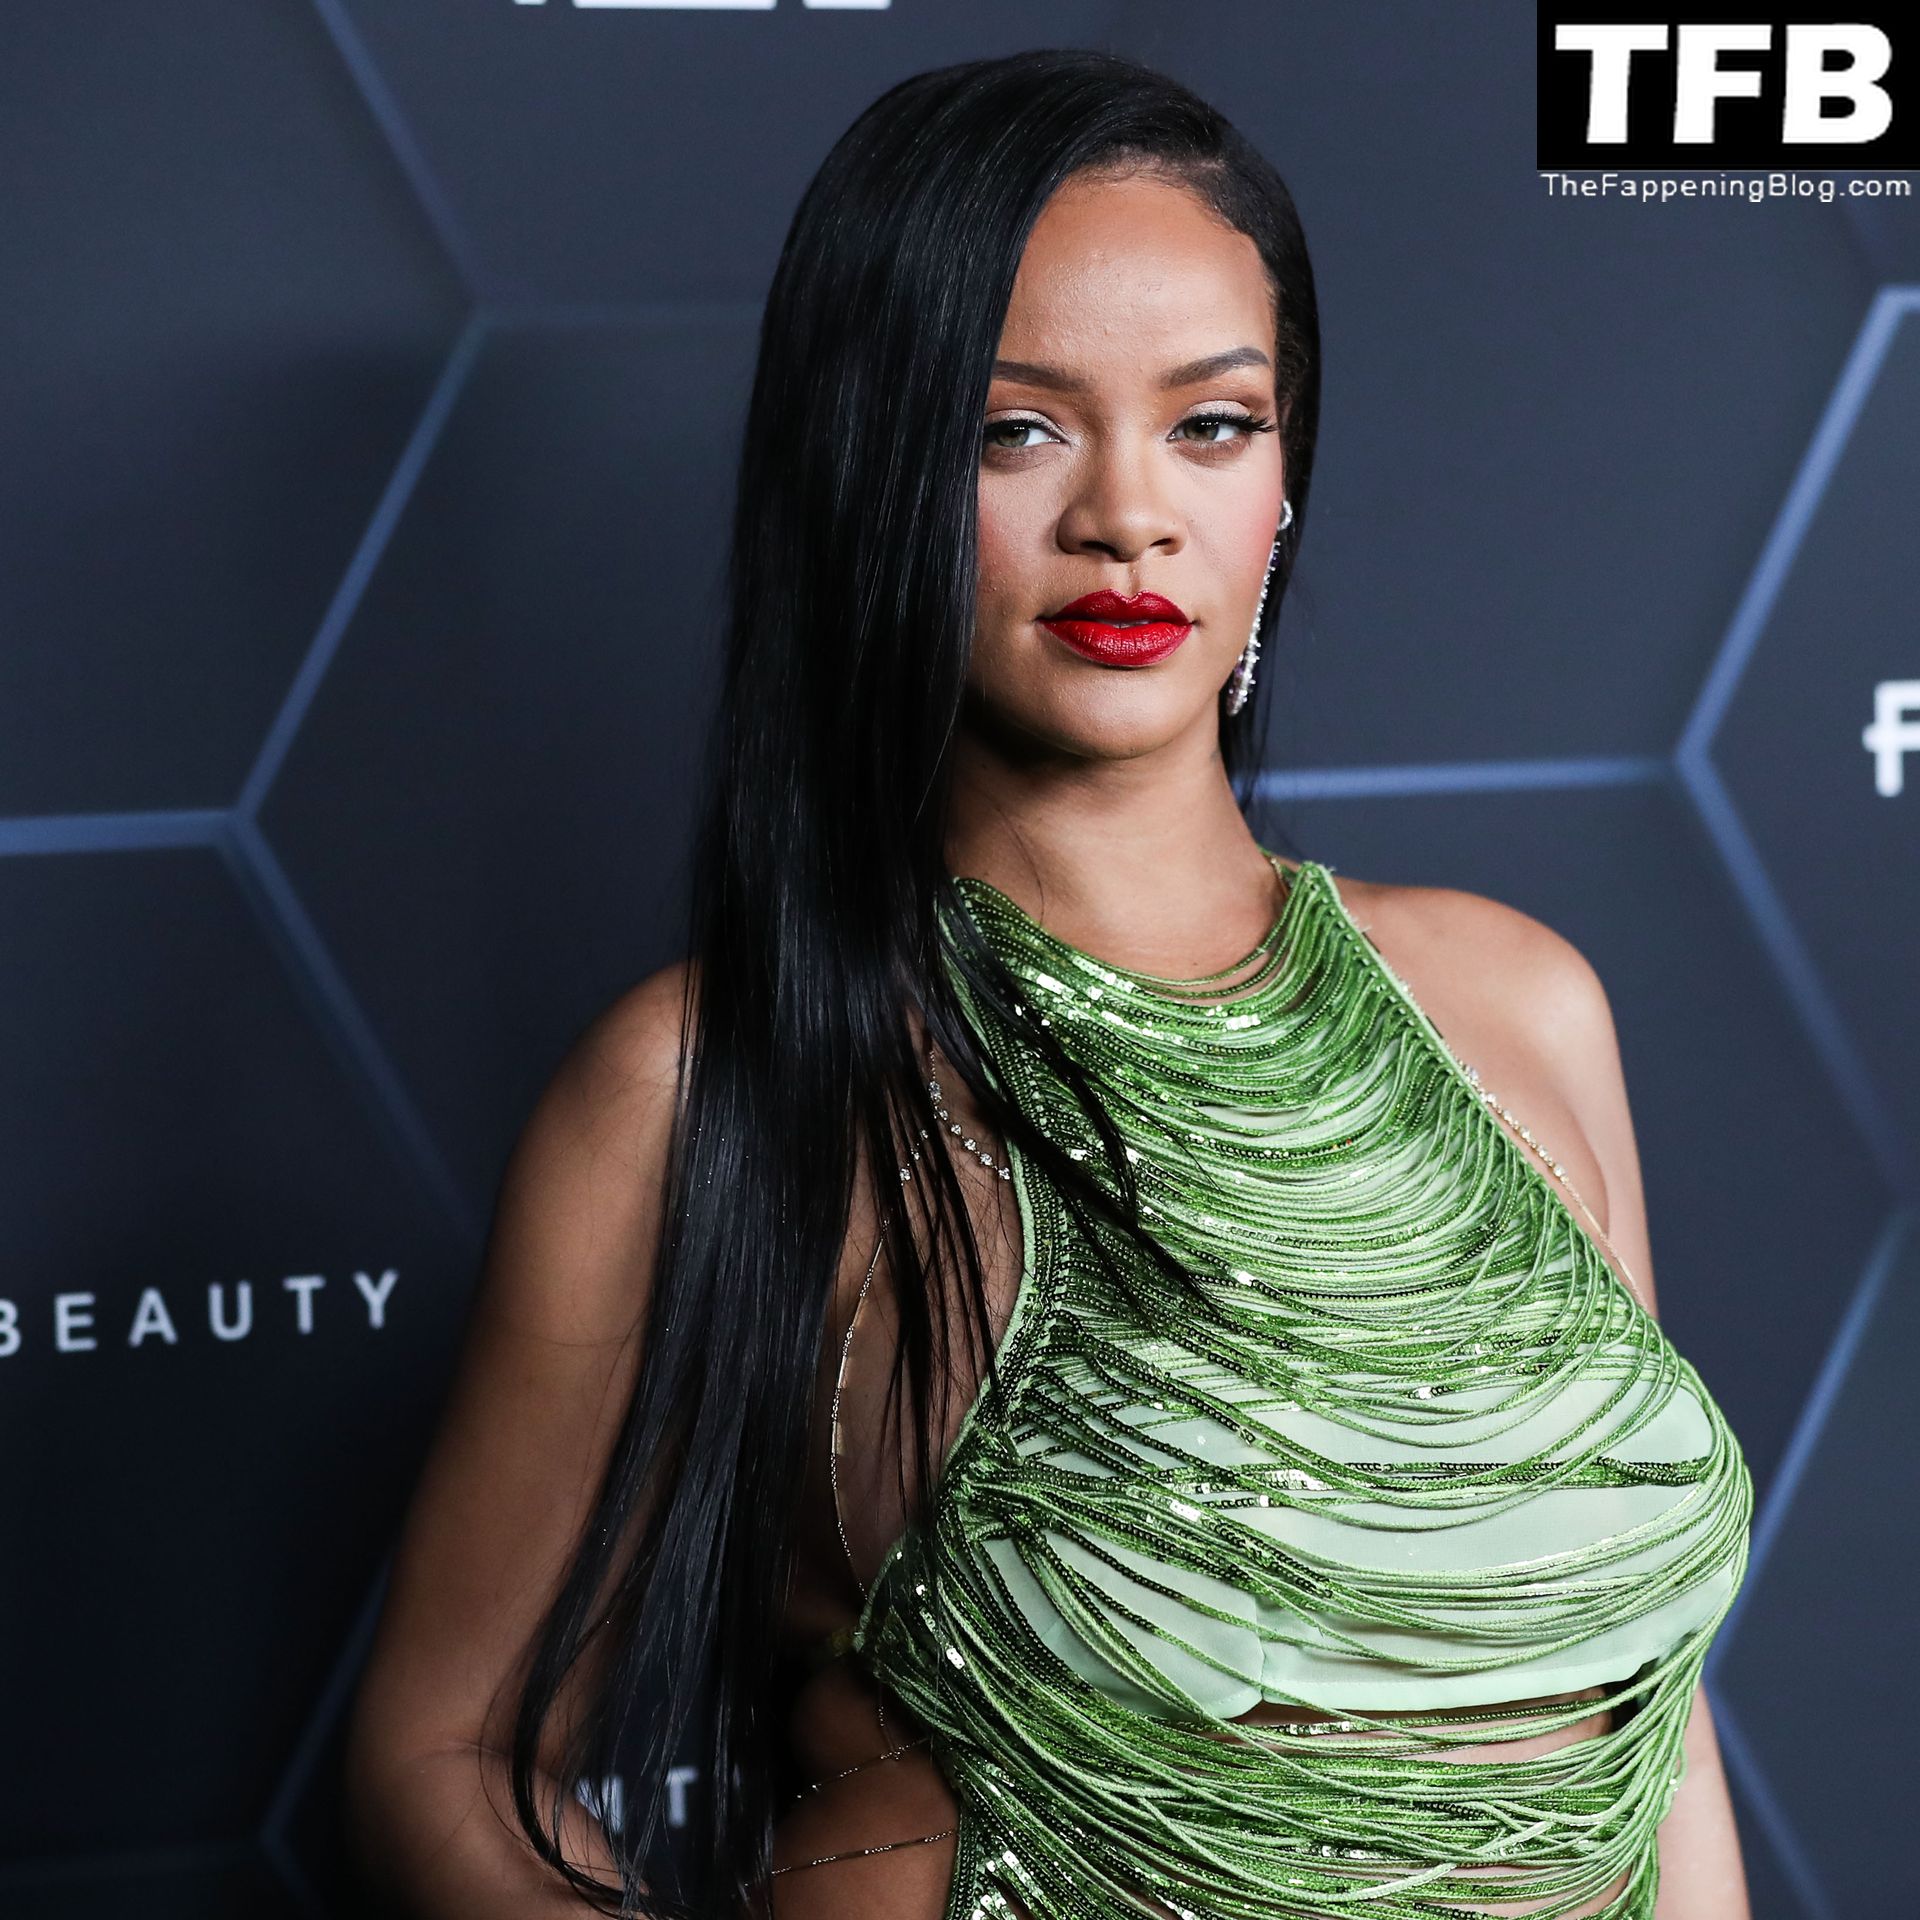 Rihanna-Sexy-The-Fappening-Blog-51.jpg